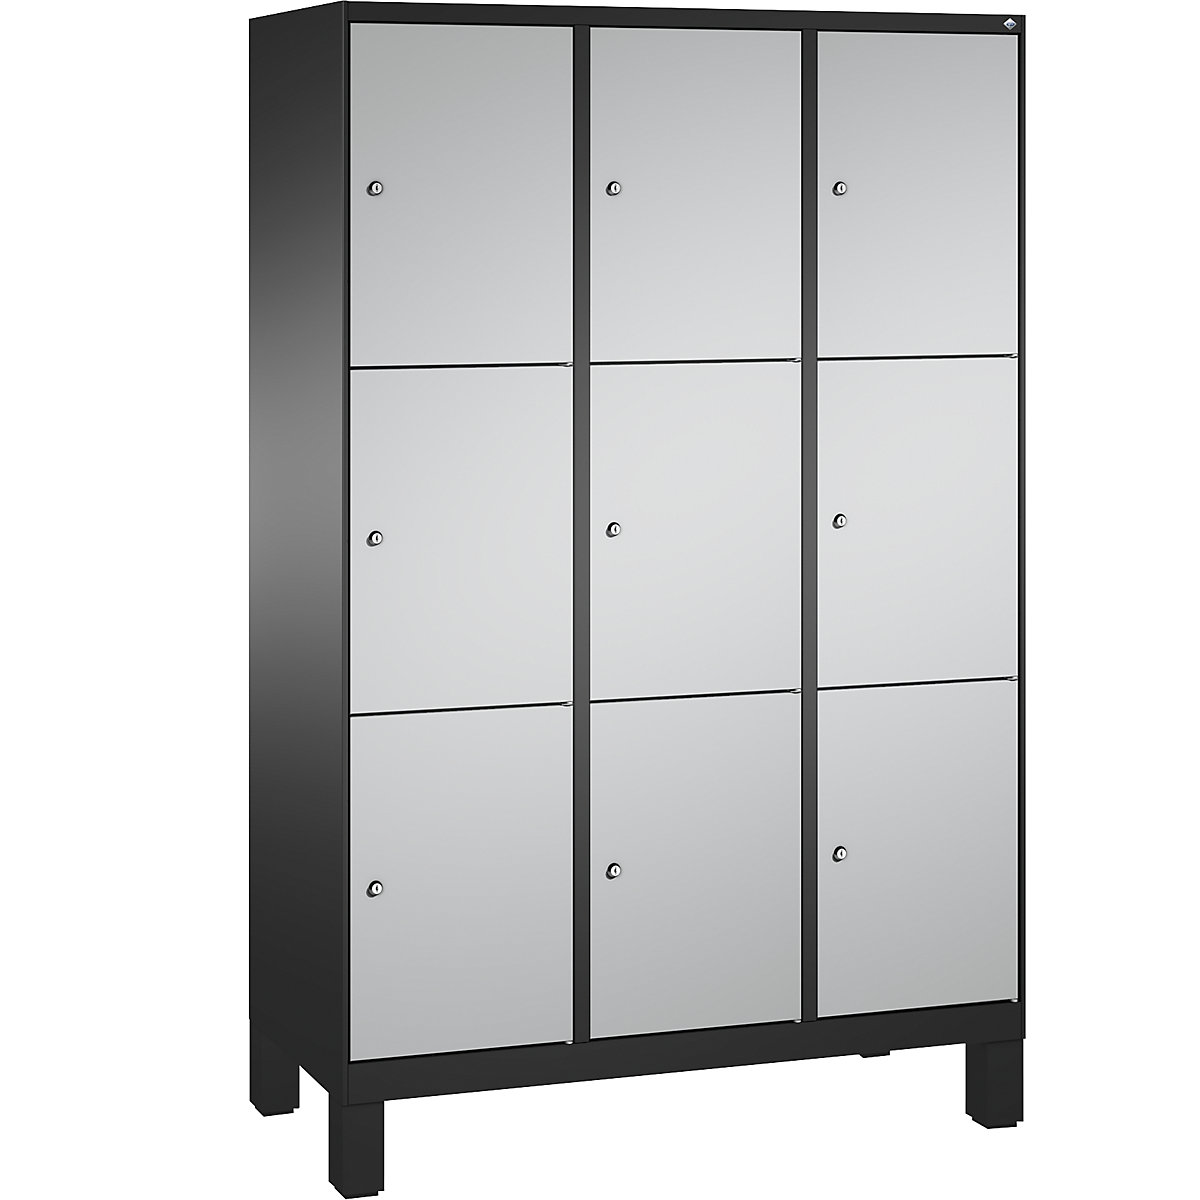 EVOLO locker unit, with feet – C+P, 3 compartments, 3 shelf compartments each, compartment width 400 mm, black grey / white aluminium-13